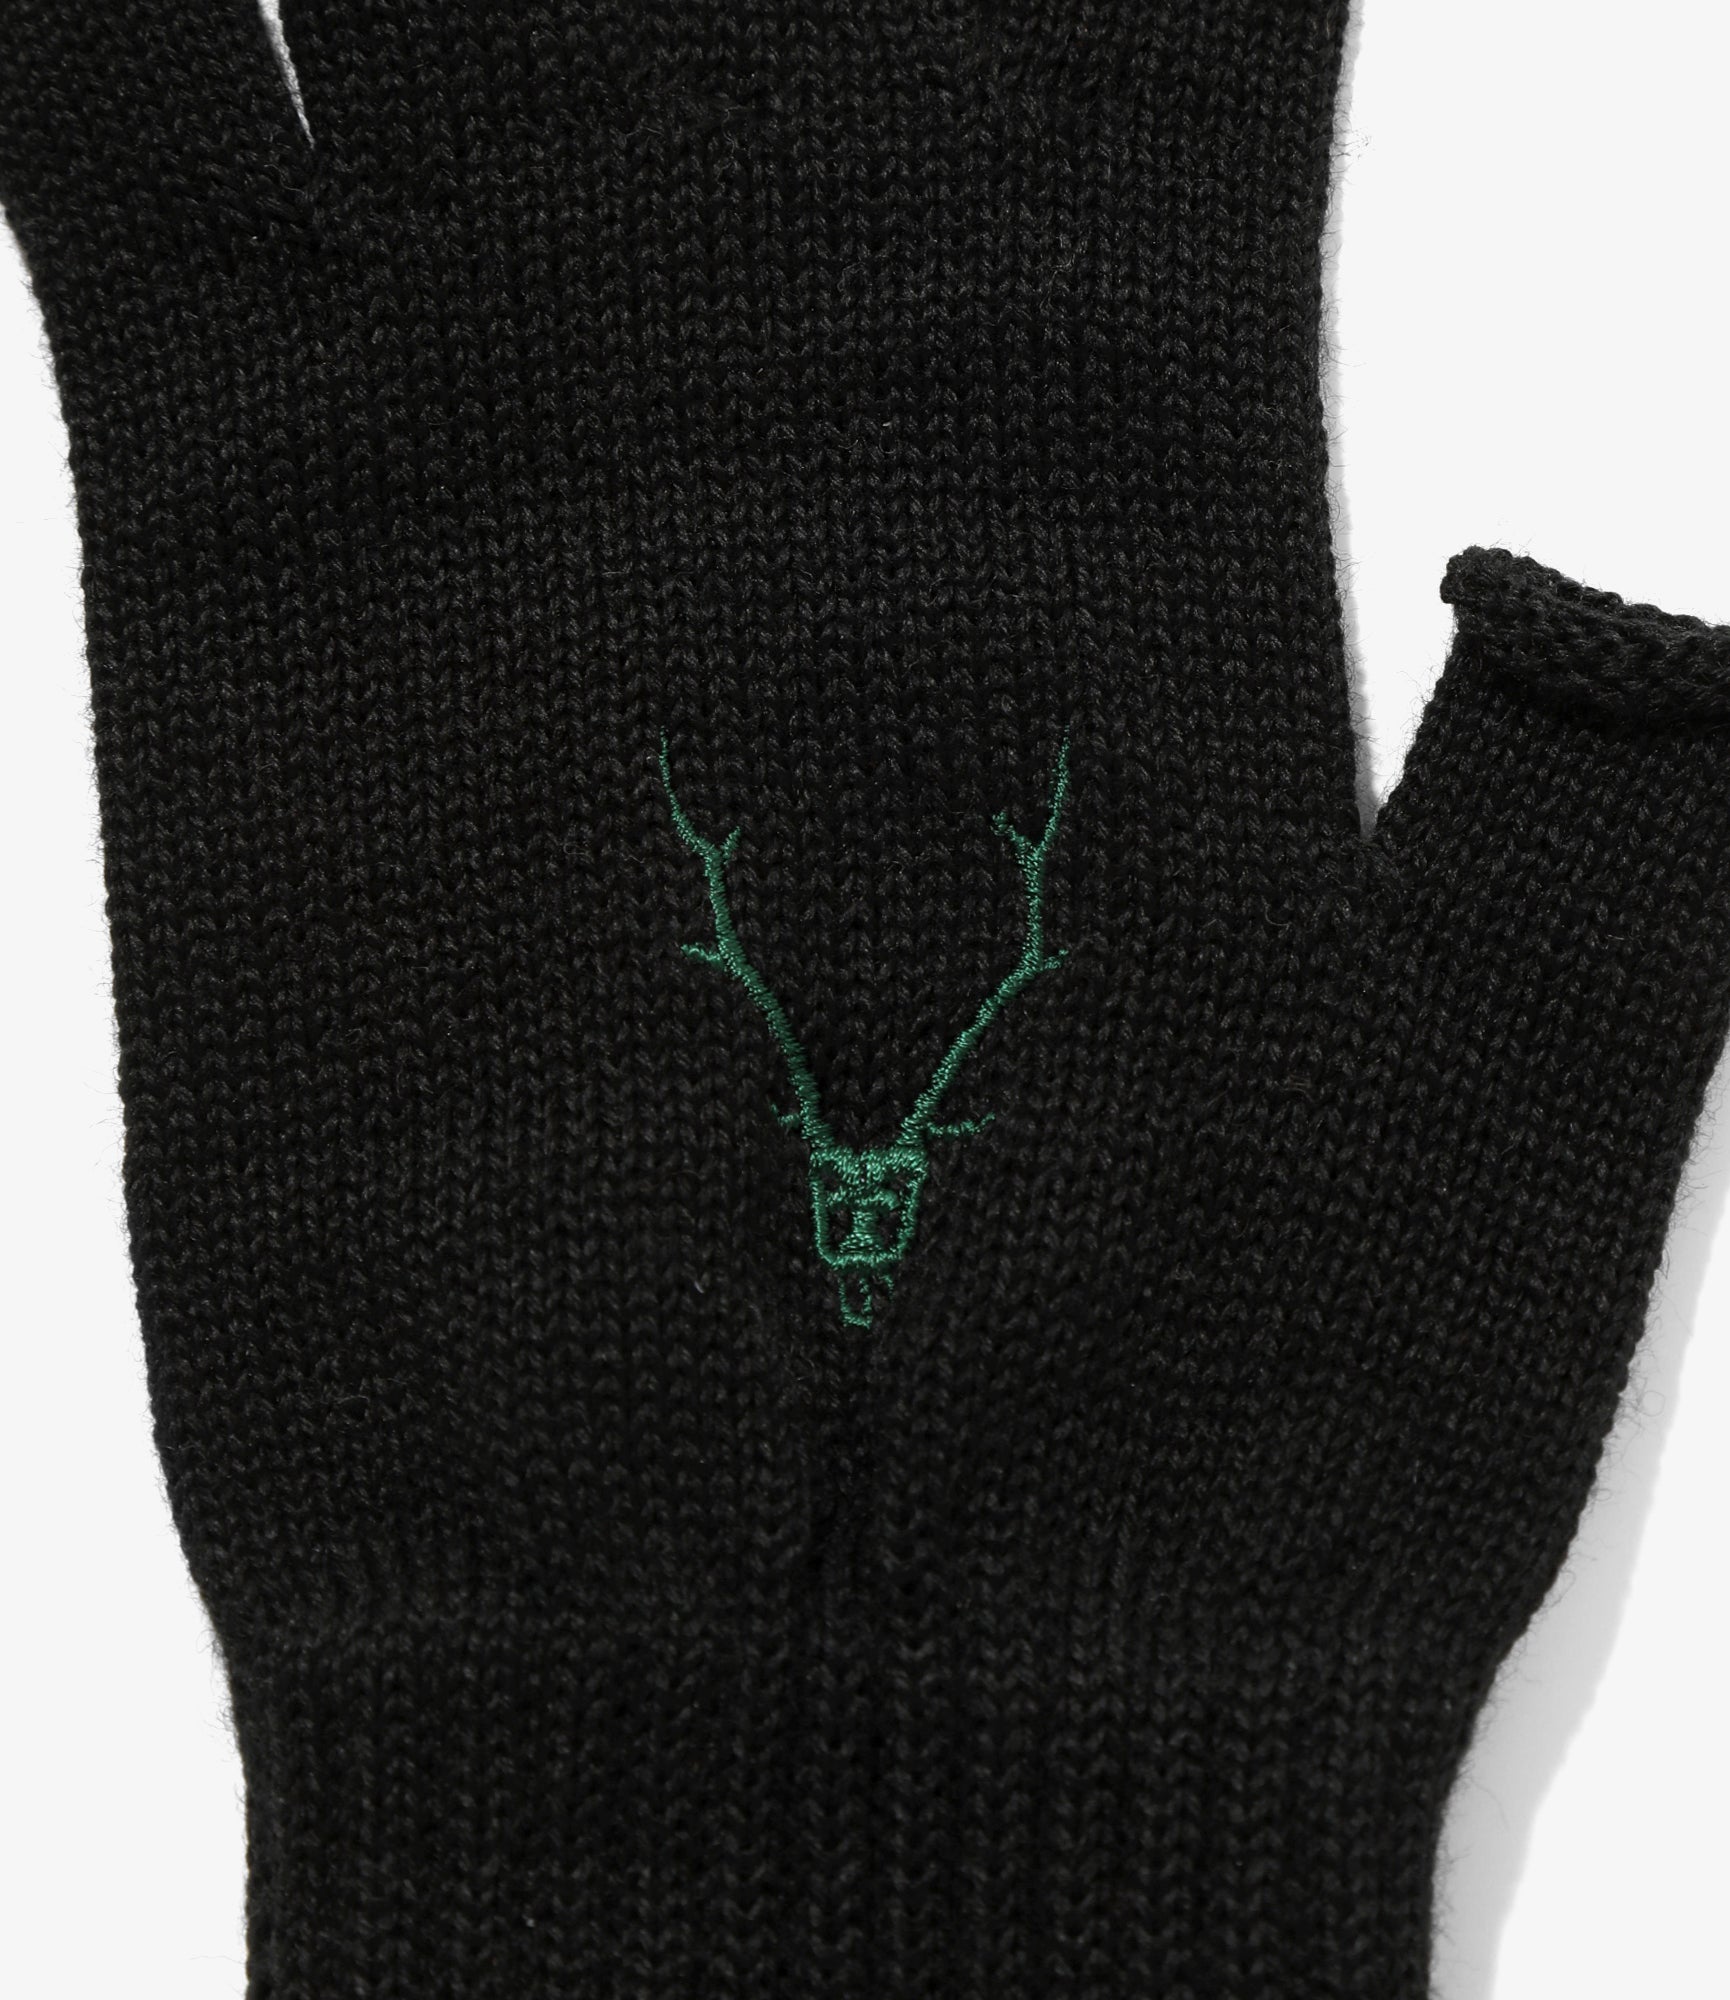 Glove - Black - W/A Knit